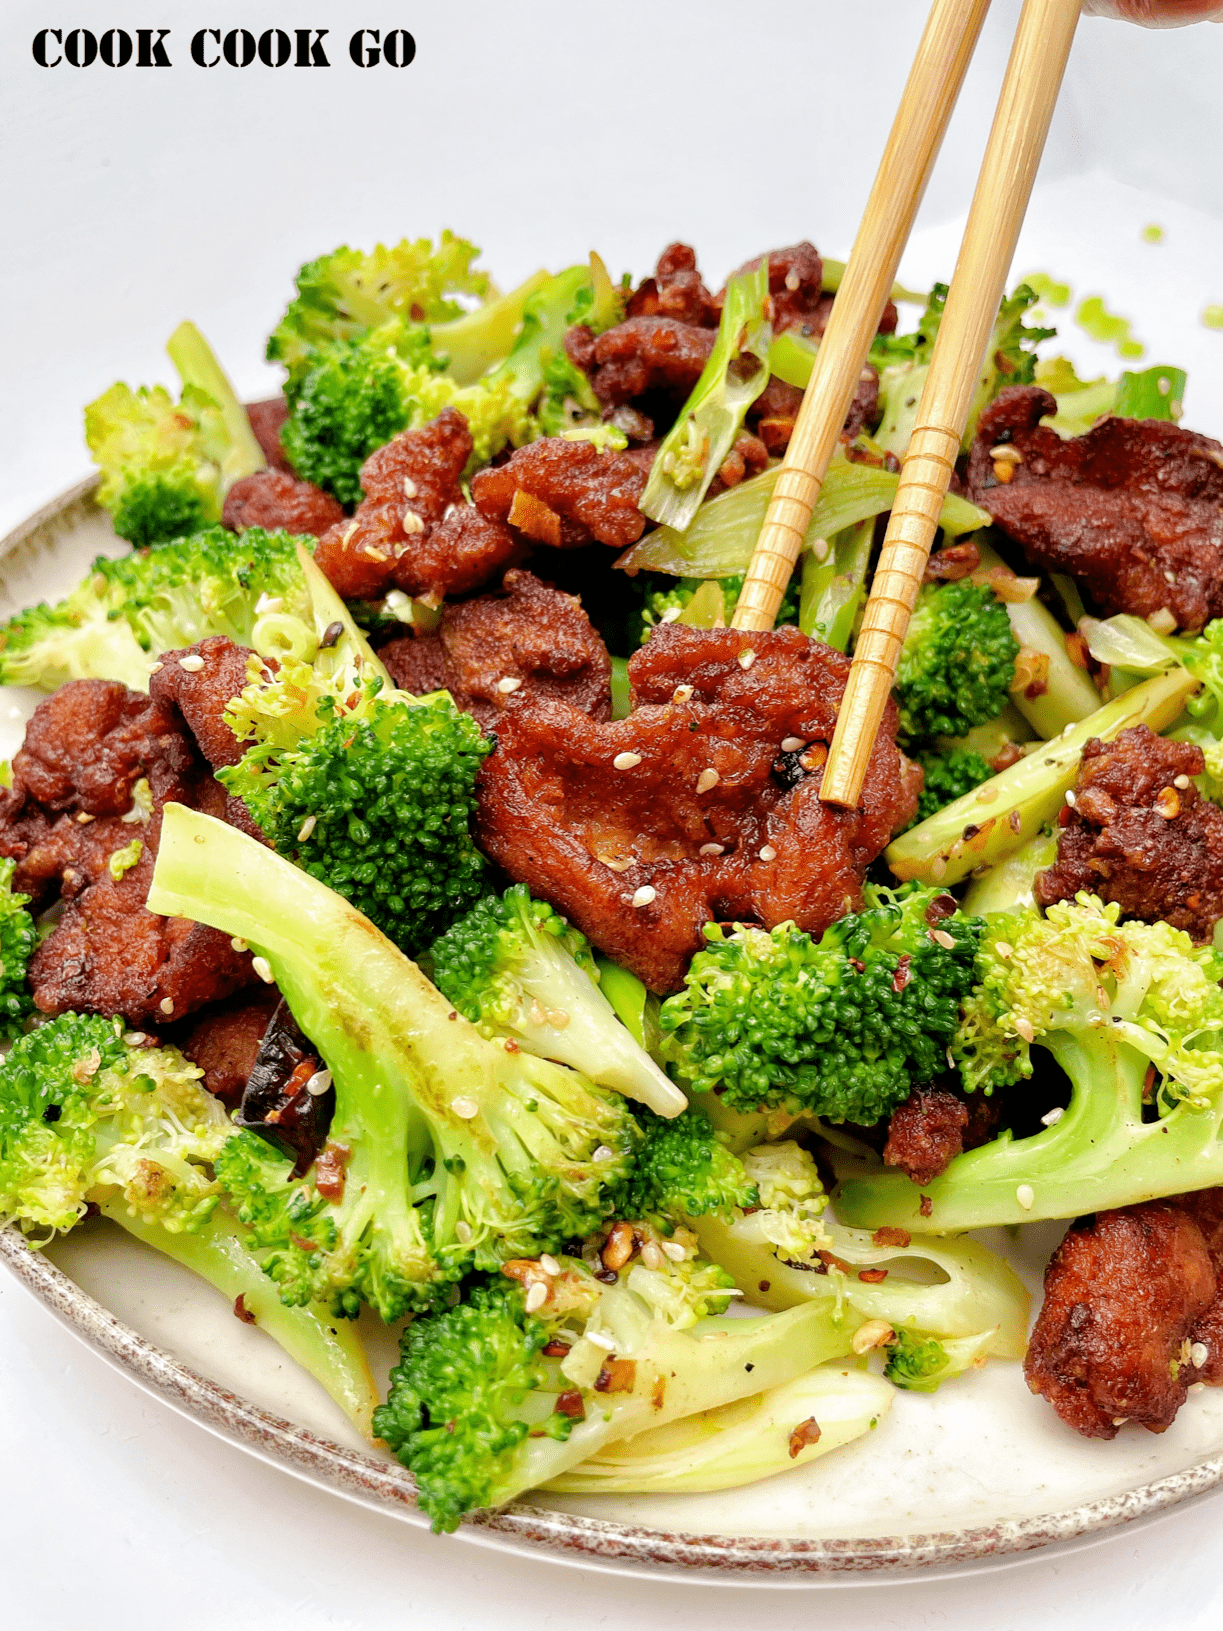 Sichuan Chili Pork with Broccoli